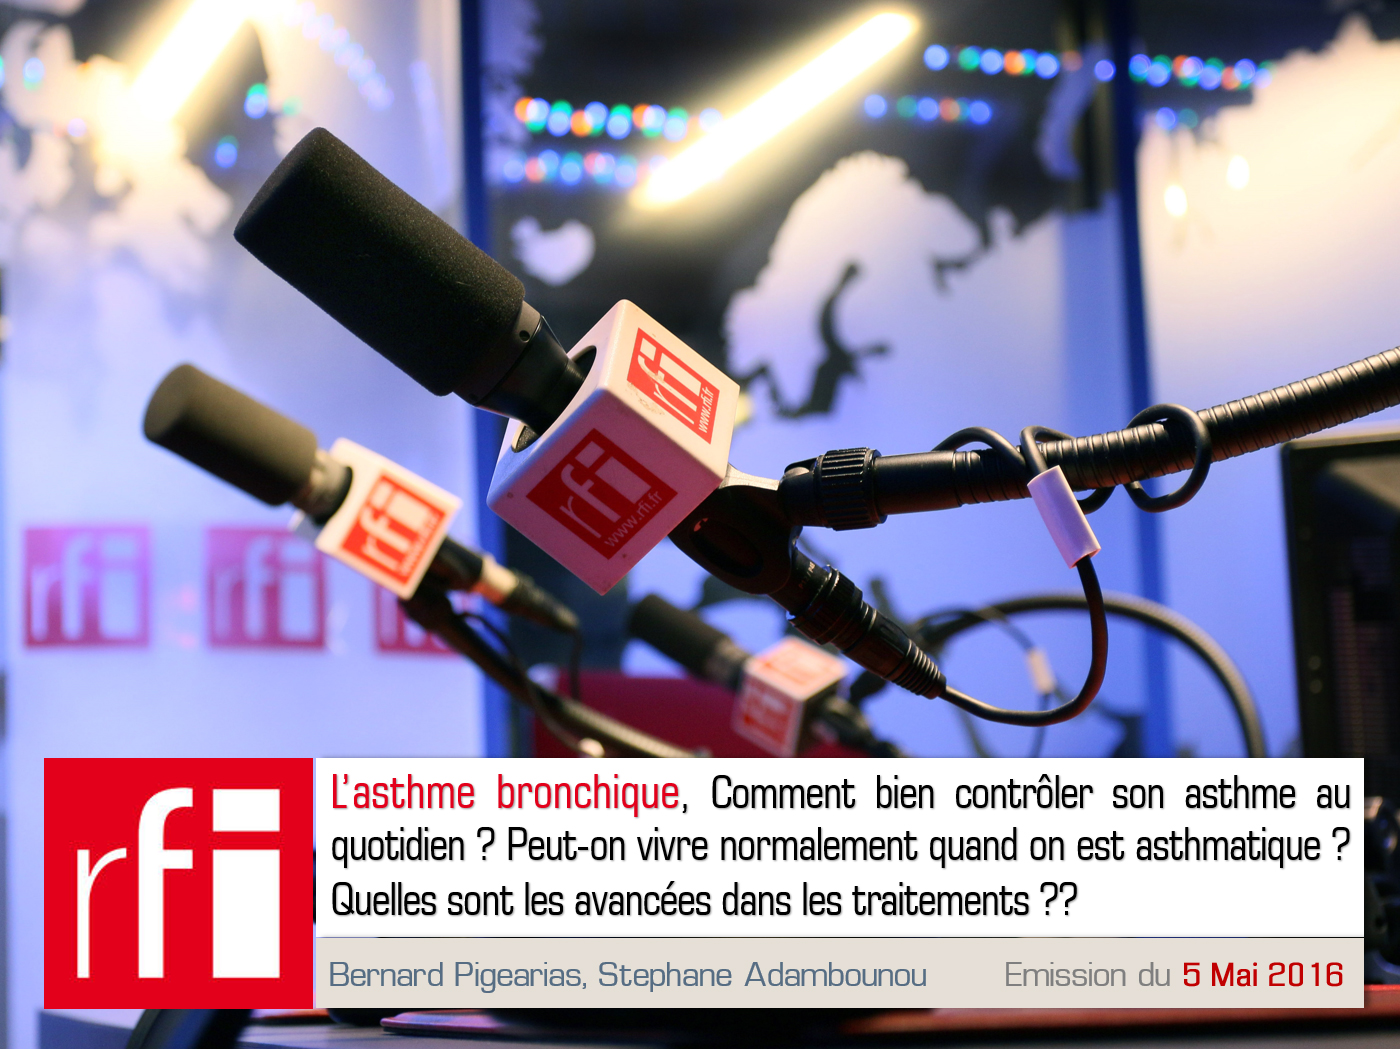 Podcast RFI sur l’asthme bronchique le 5 mai 2016. Bernard Pigearias &  Stephane Adambounou